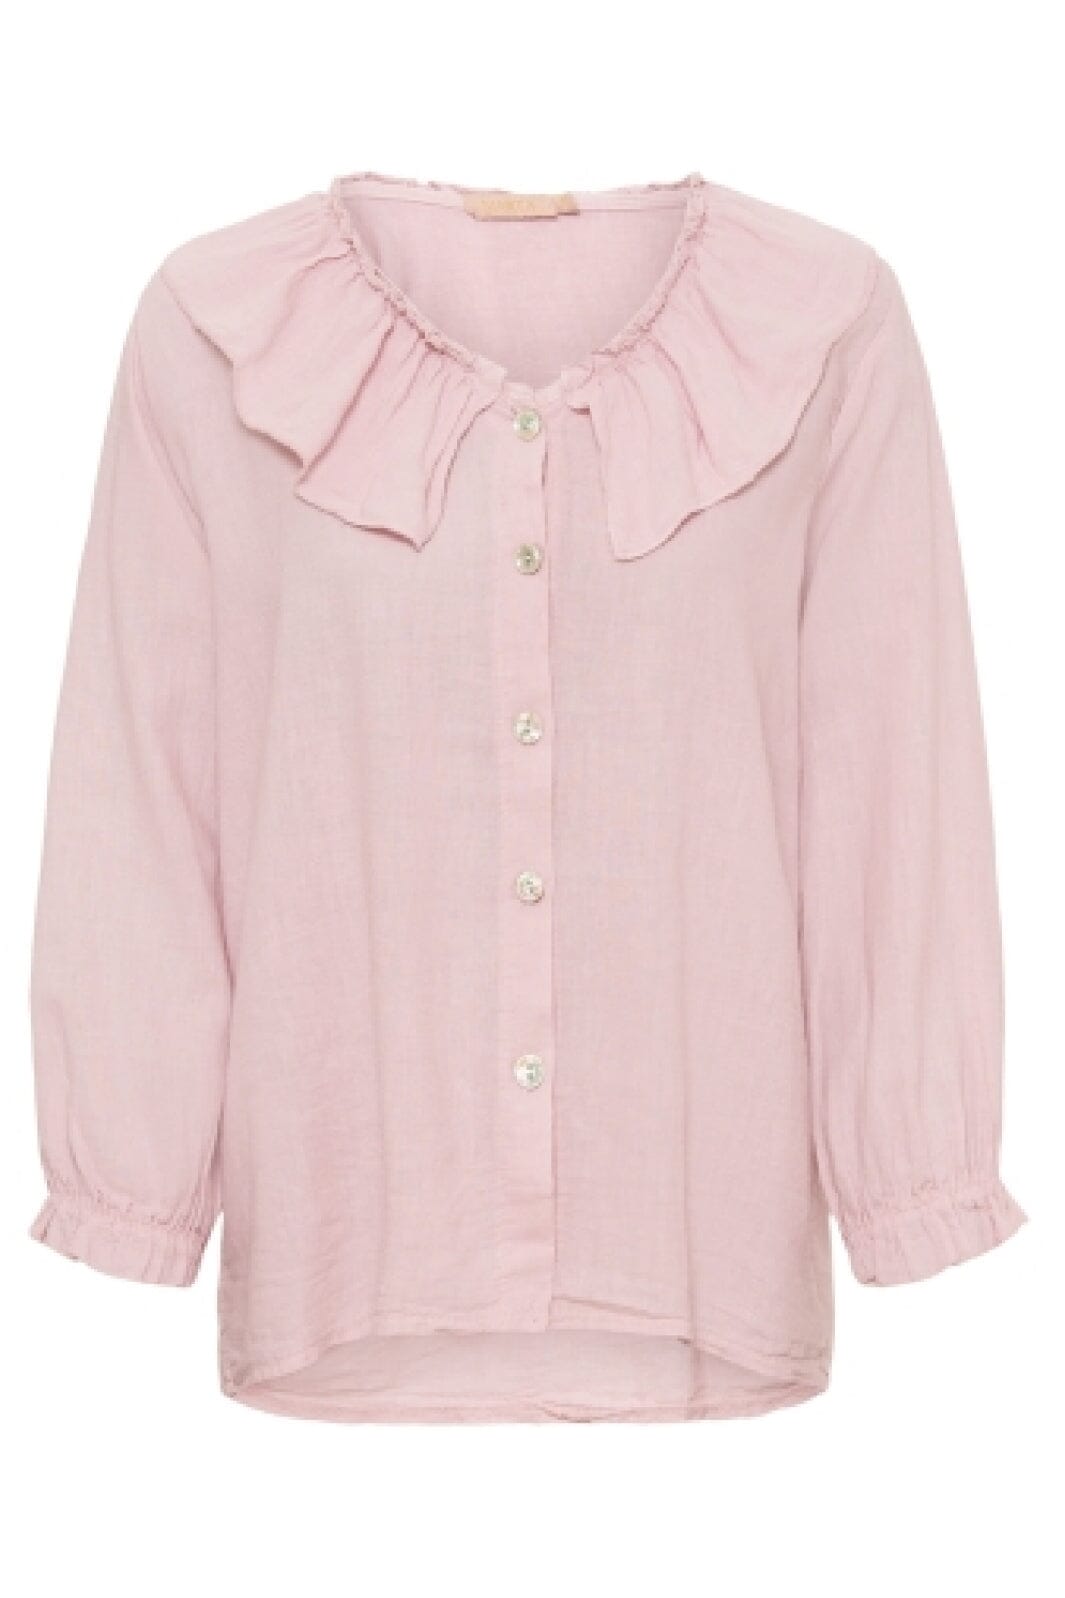 Marta Du Chateau - Shirt - K1123 Rosa Antique Skjorter 